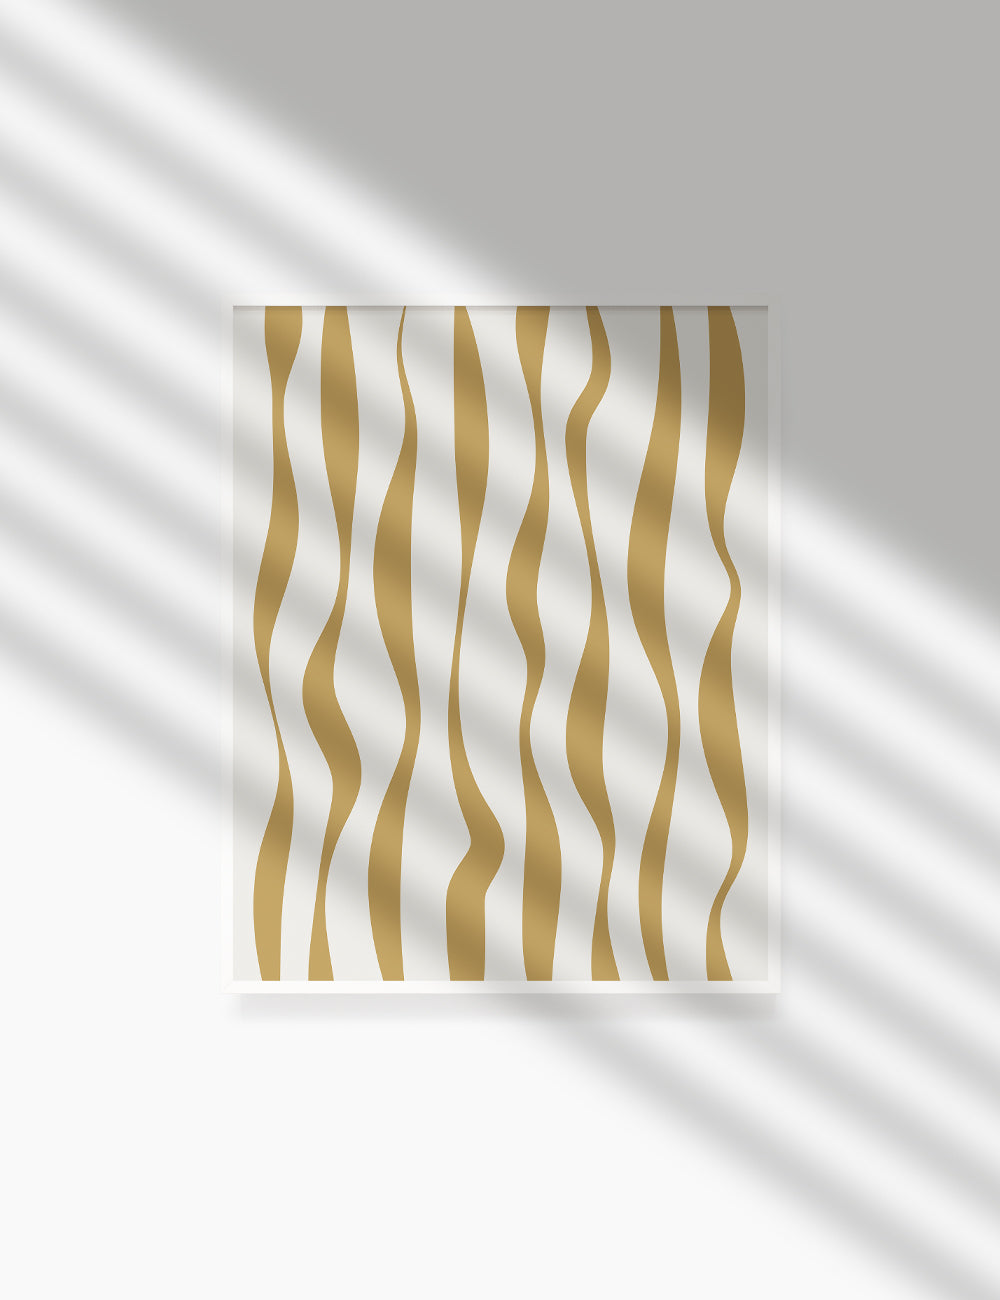 ABSTRACT MINIMAL WAVY LINES. Boho Art Print. Printable Wall Art Illustration. Wavy lines in dull orange and beige. Abstract art. Minimal design. Minimalist, abstract illustration art. Printable poster. | PAPER MOON Art & Design